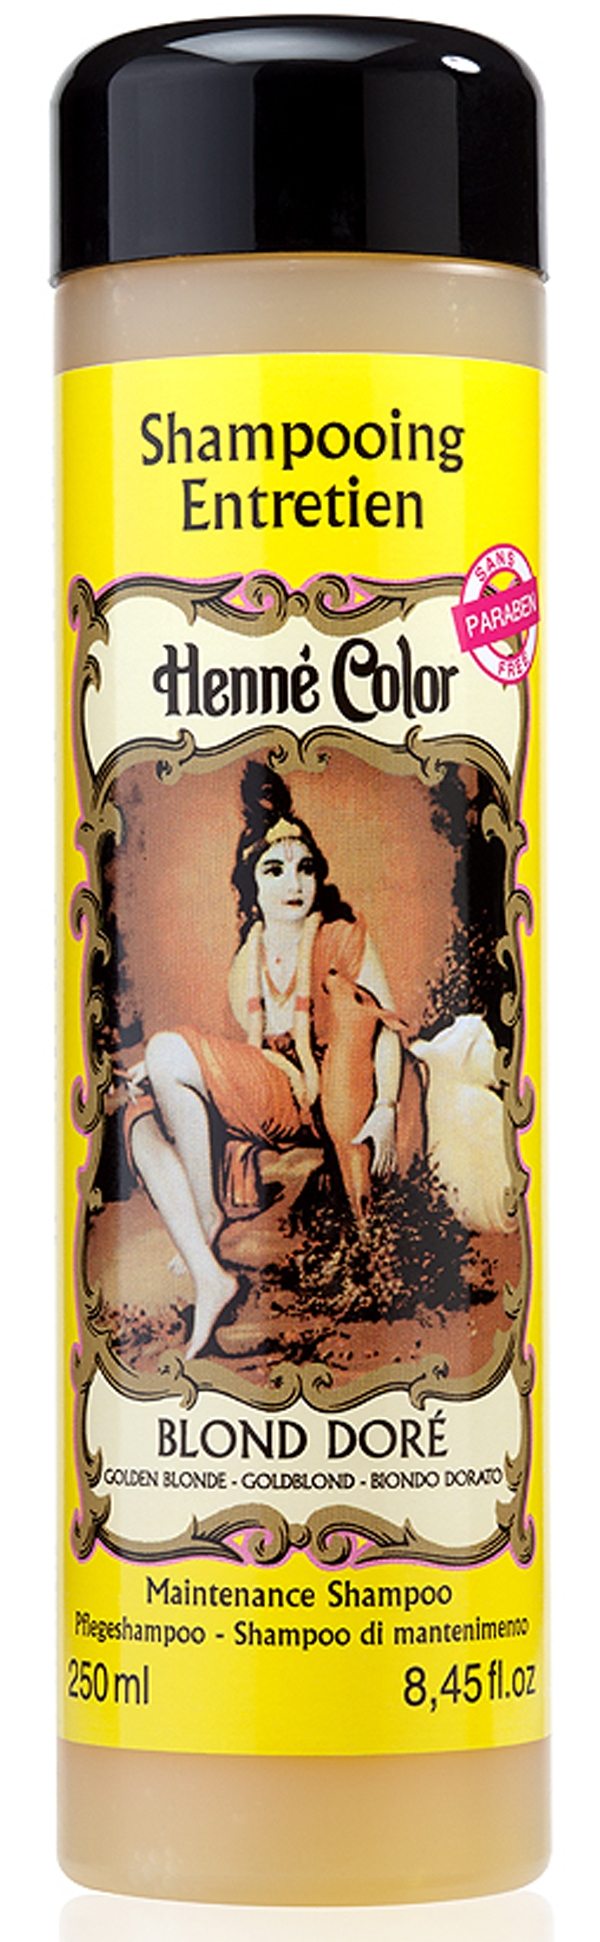 Pack de 3 Champús de Mantenimiento Henna Color Rubio Dorado 250ml